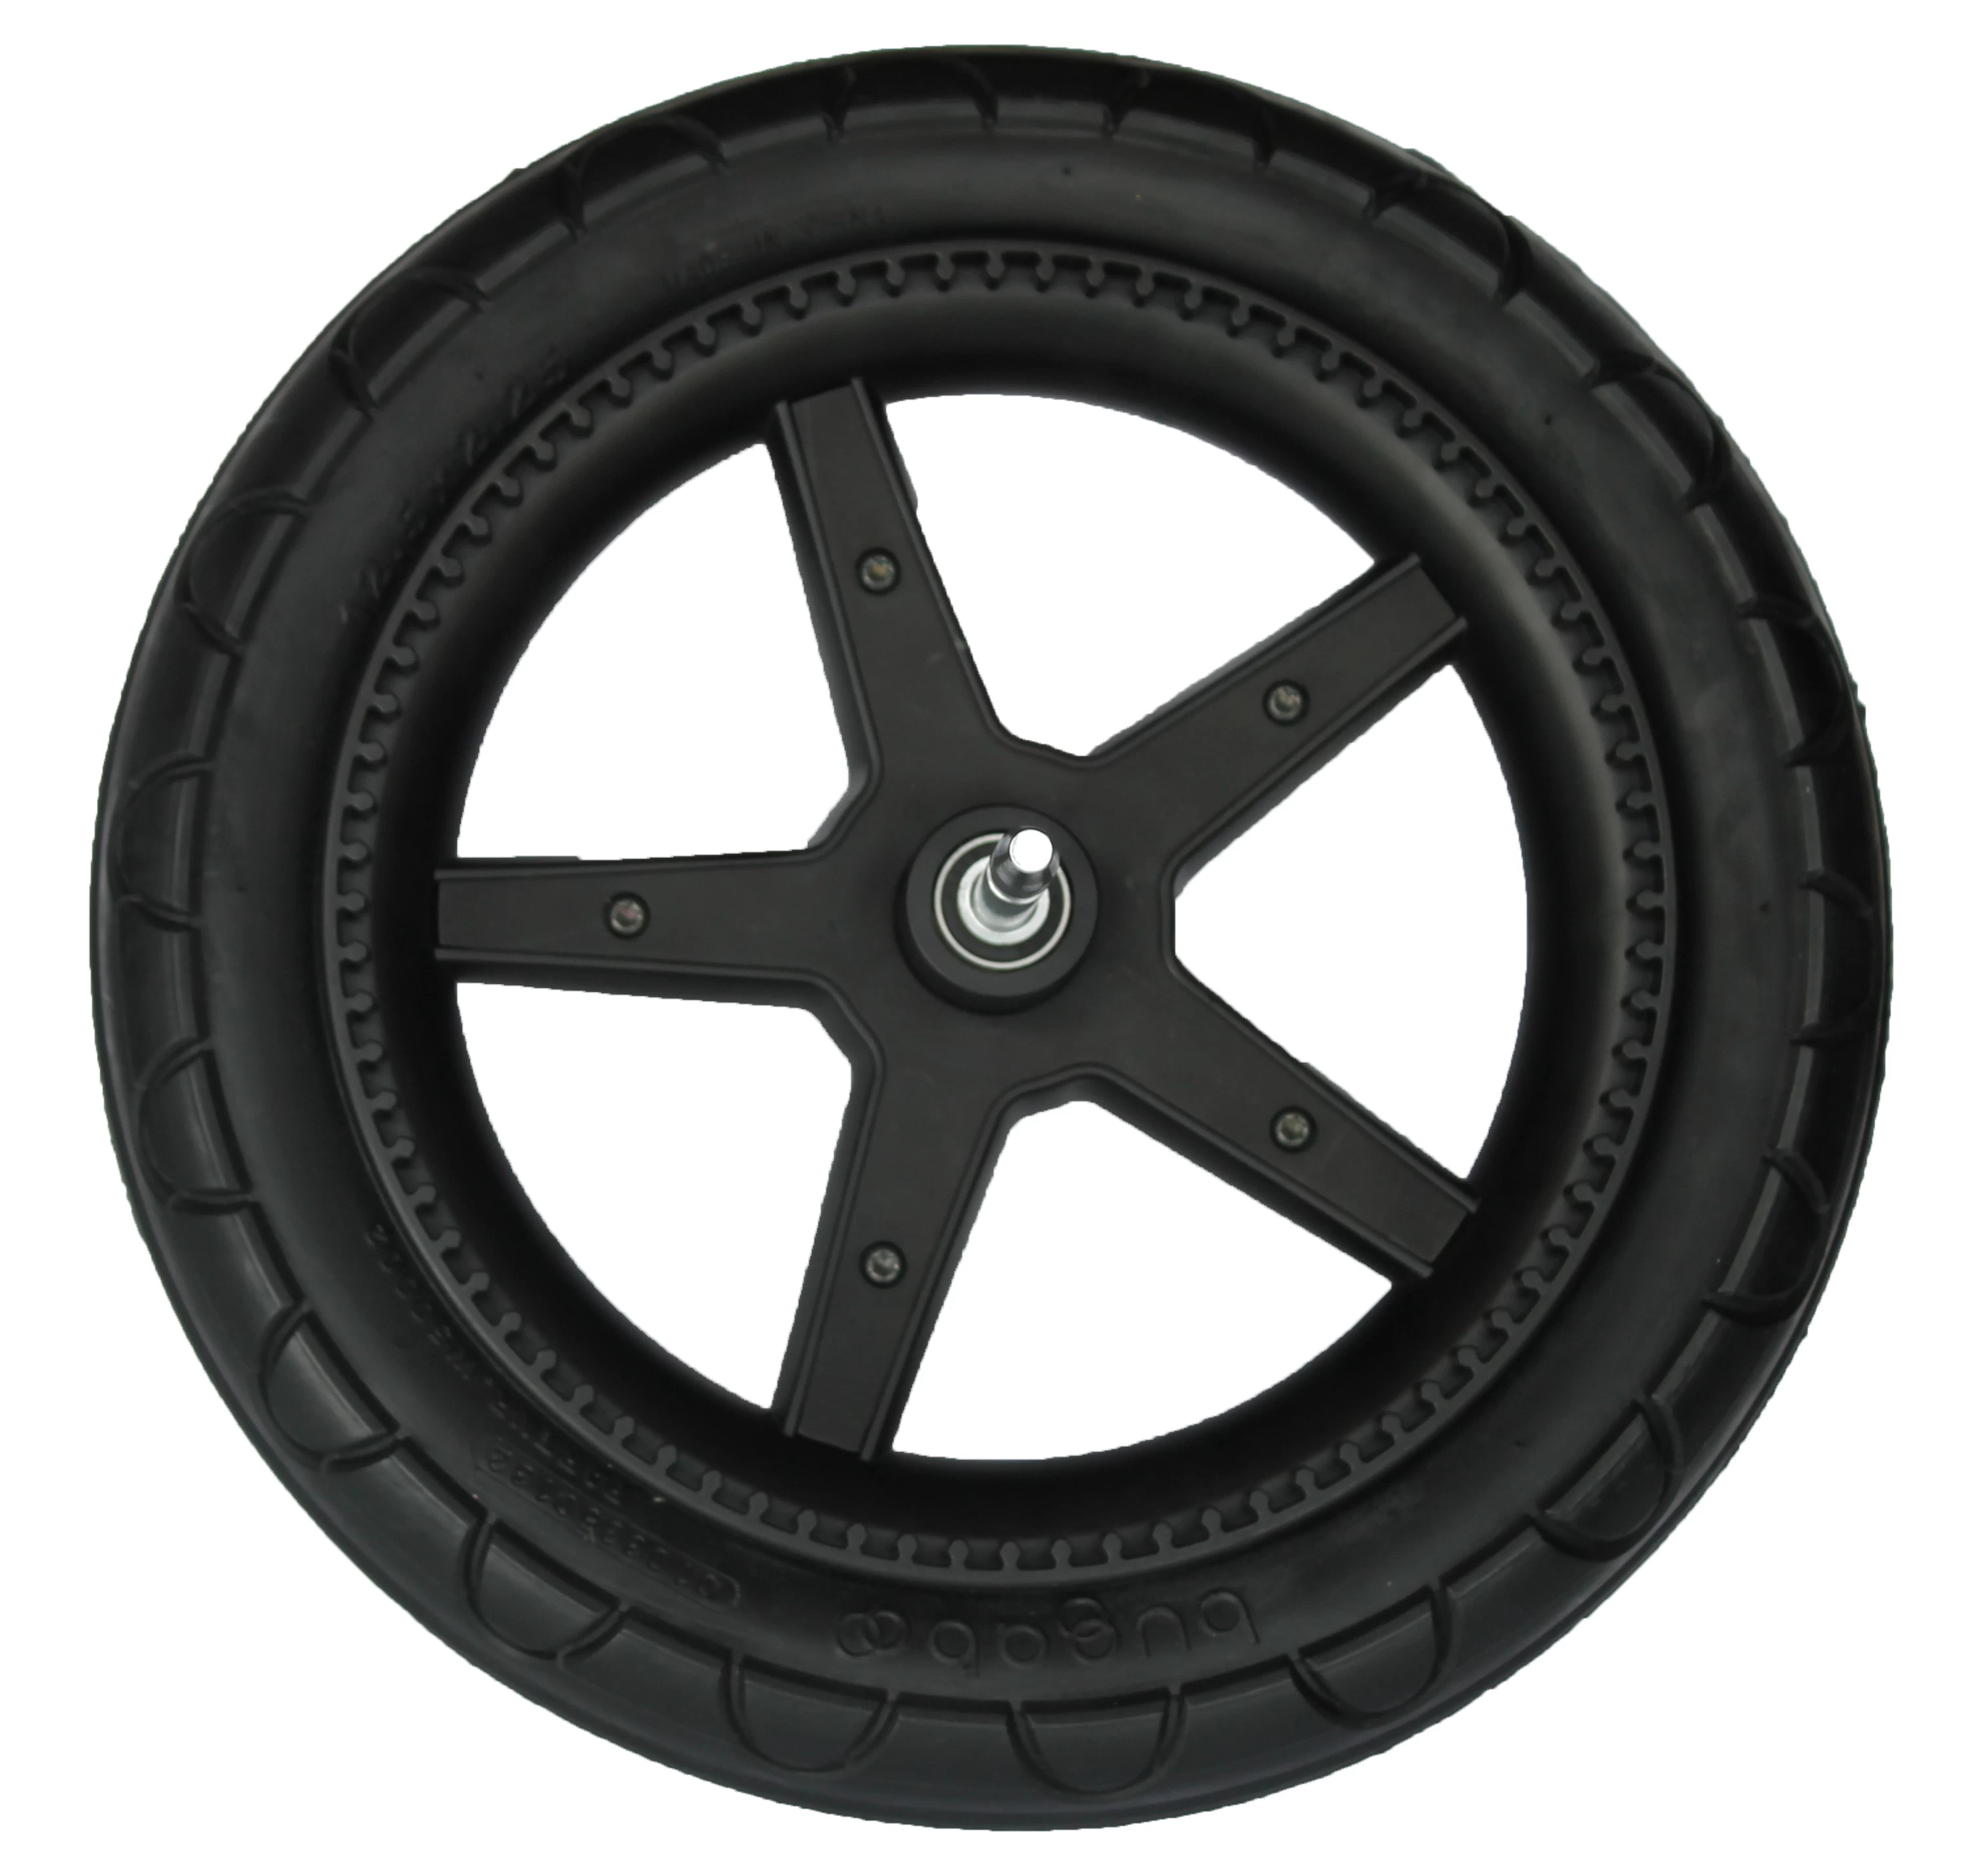 Polyurethane tire, tires for sale, custom wheels, foam filled tires, custom wheels